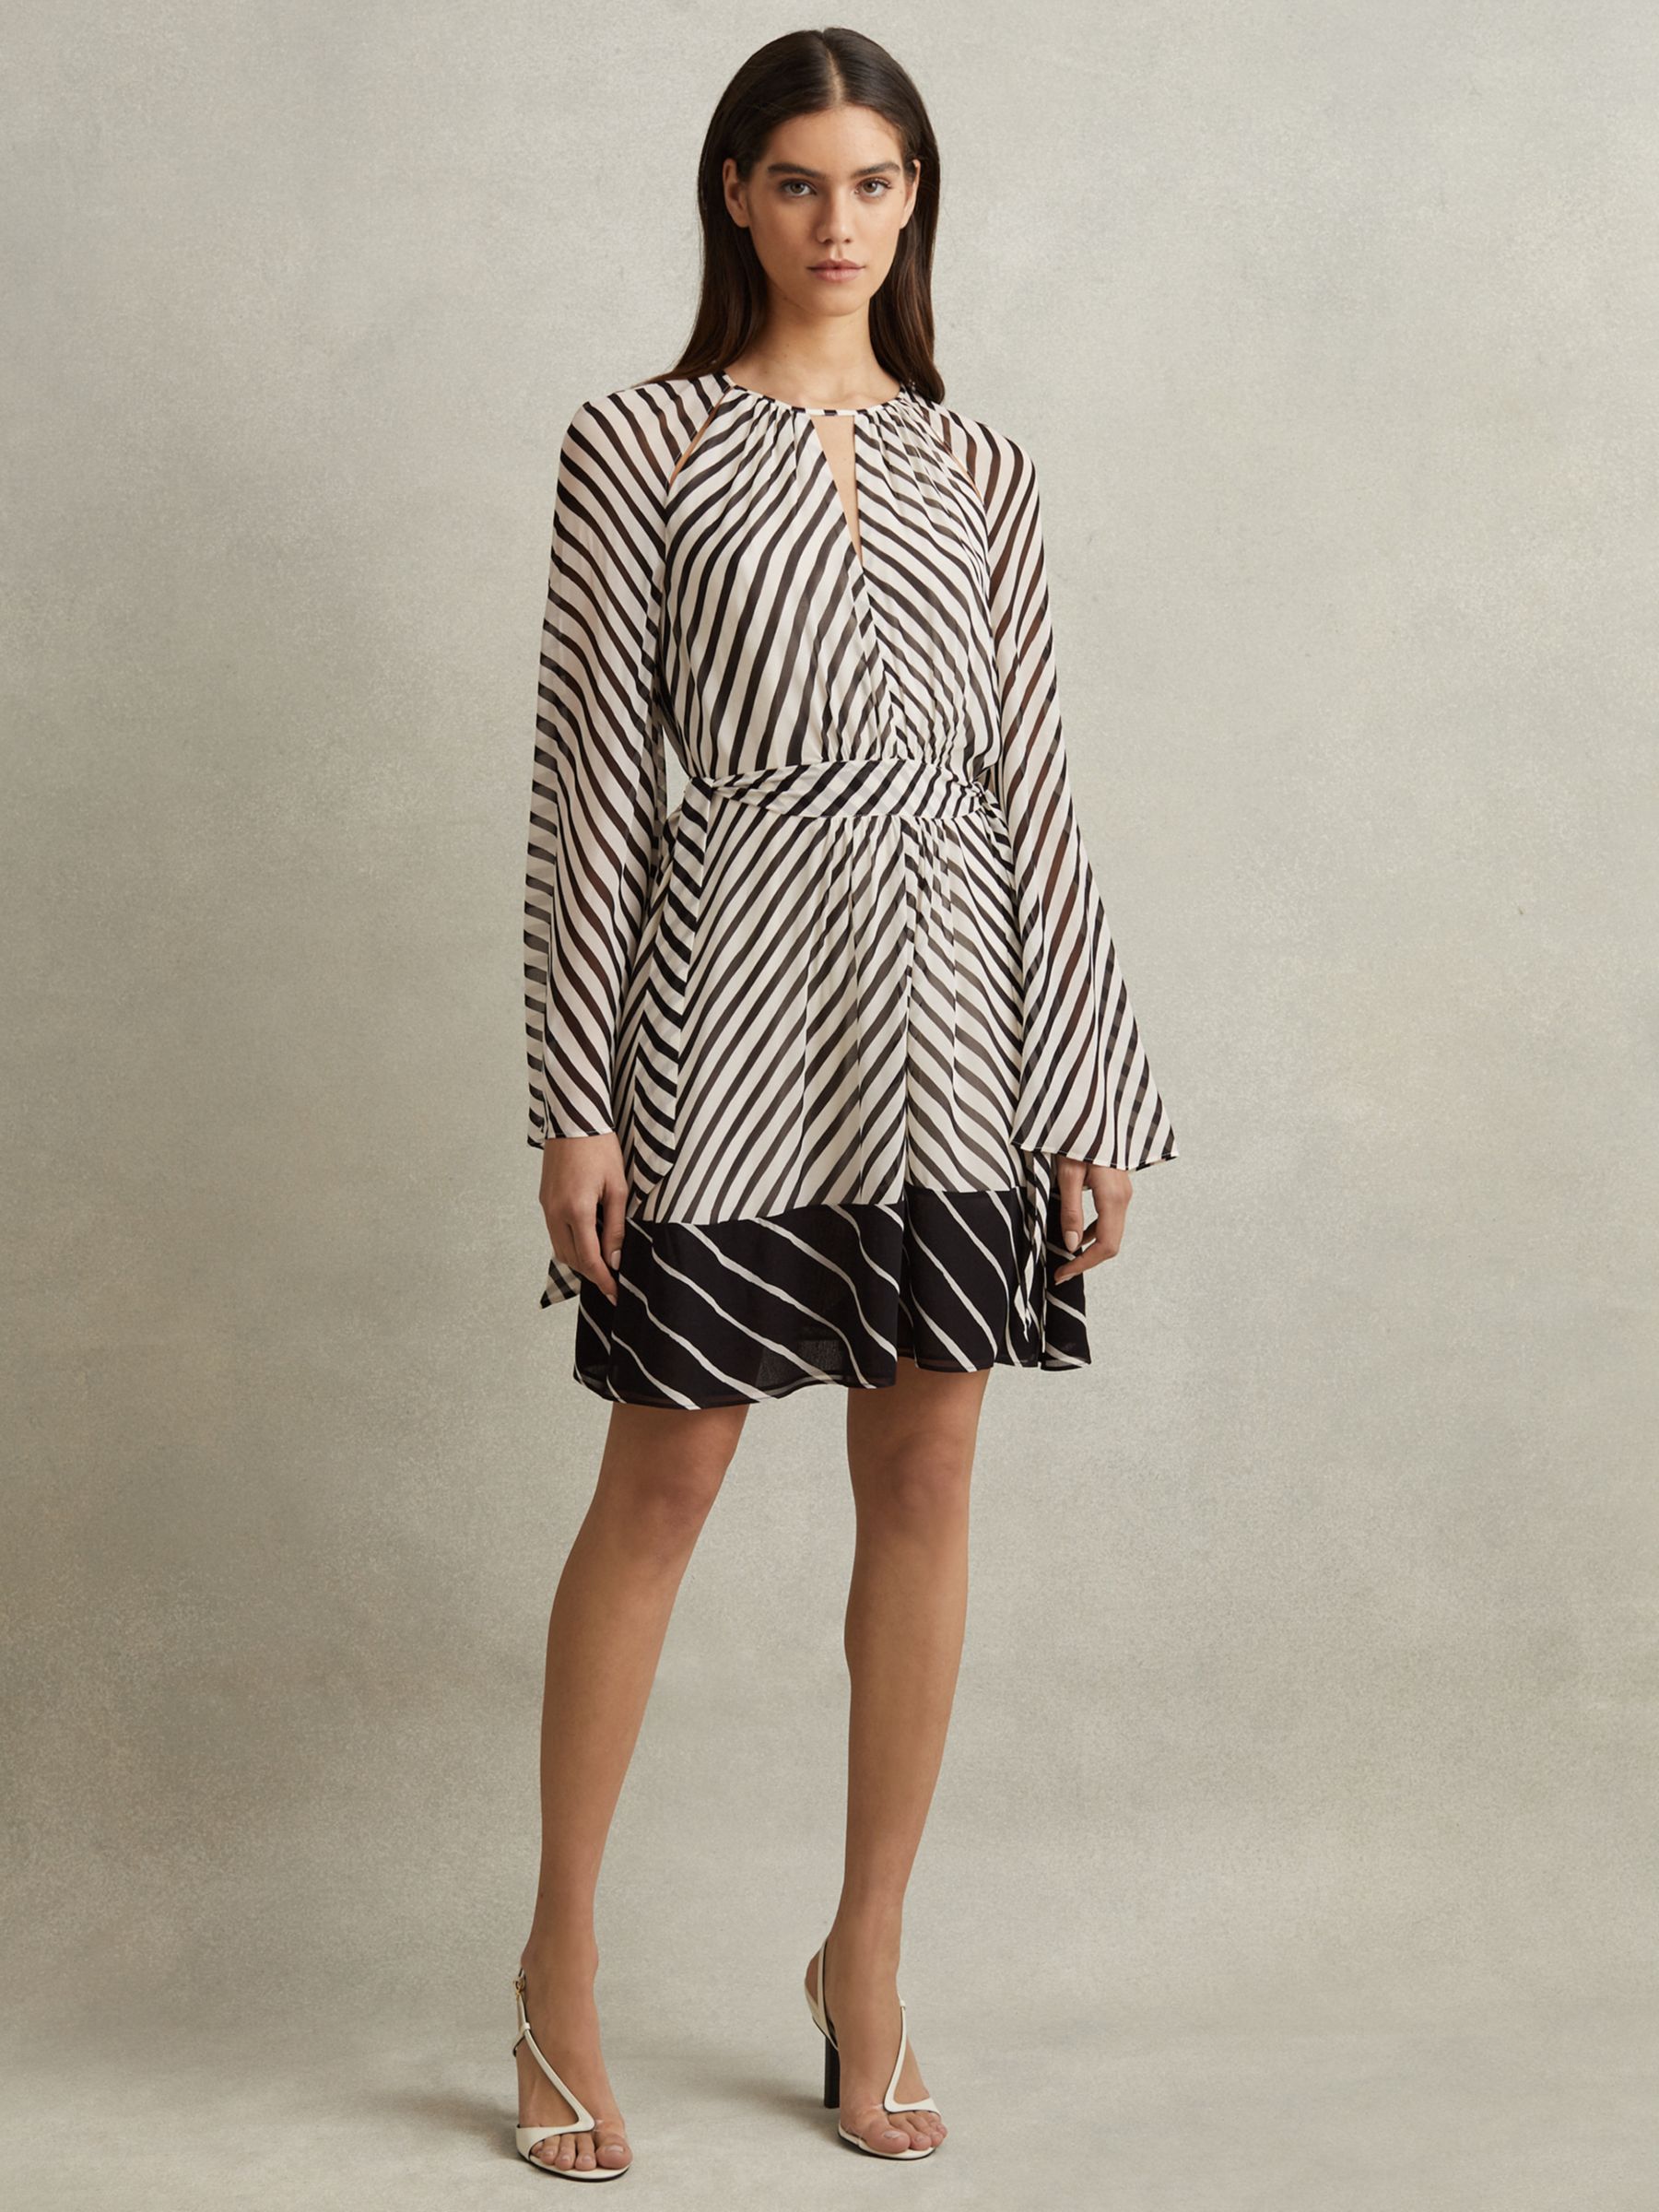 Reiss Minty Stripe Mini Dress, Black/Neutral, 6